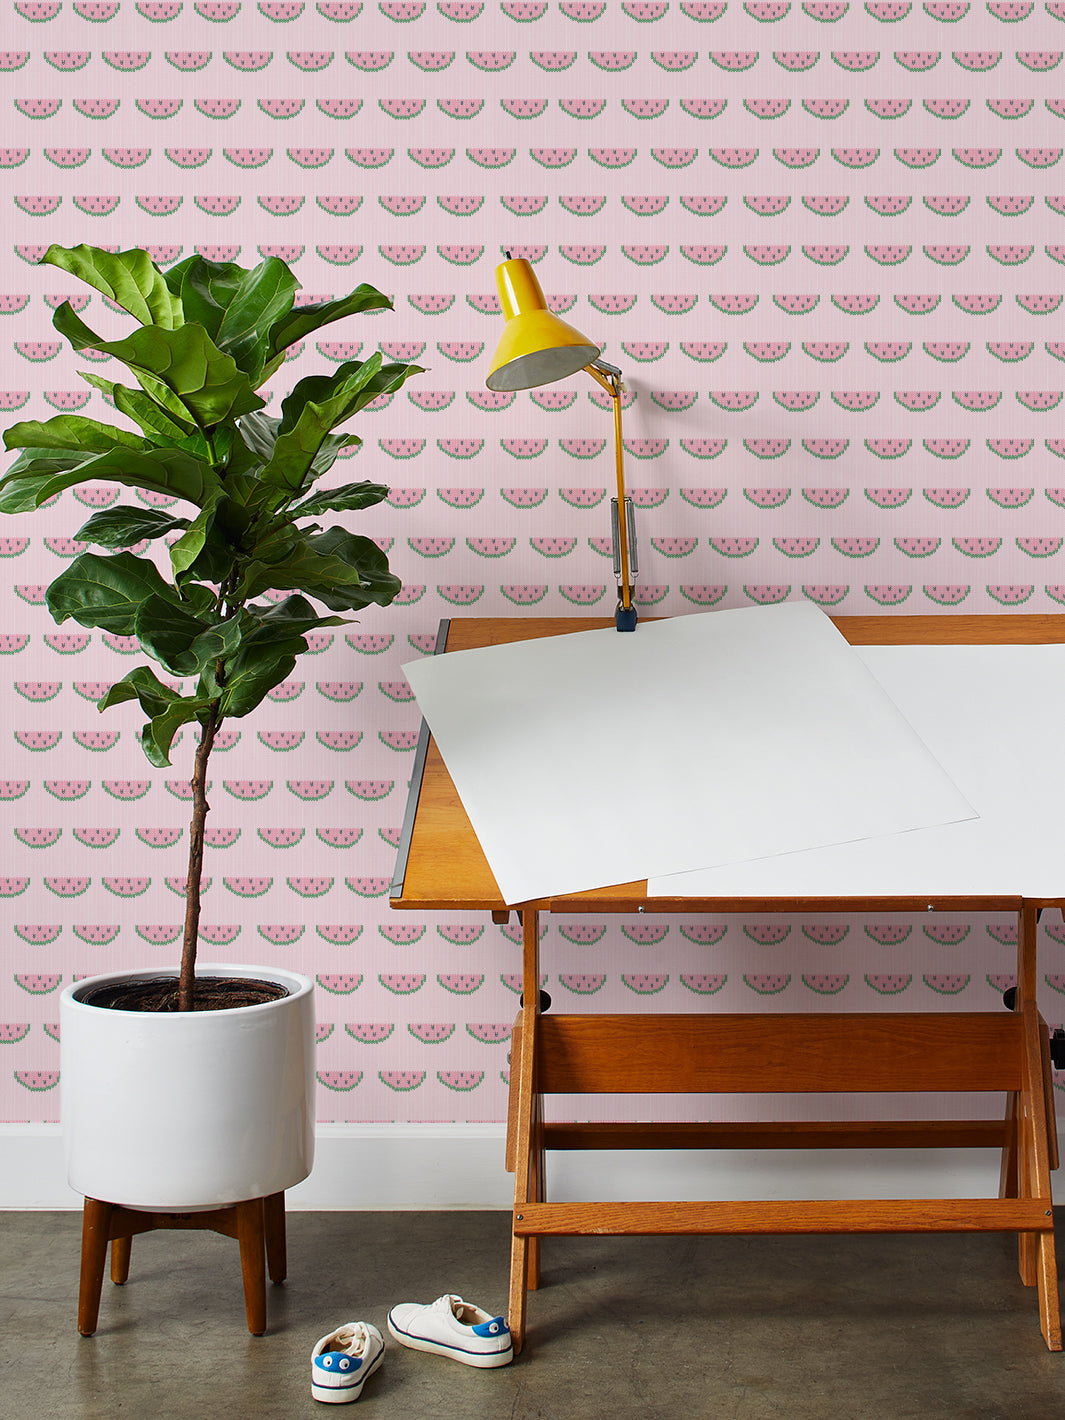 'Watermelon Knit' Wallpaper by Tea Collection - Bubblegum